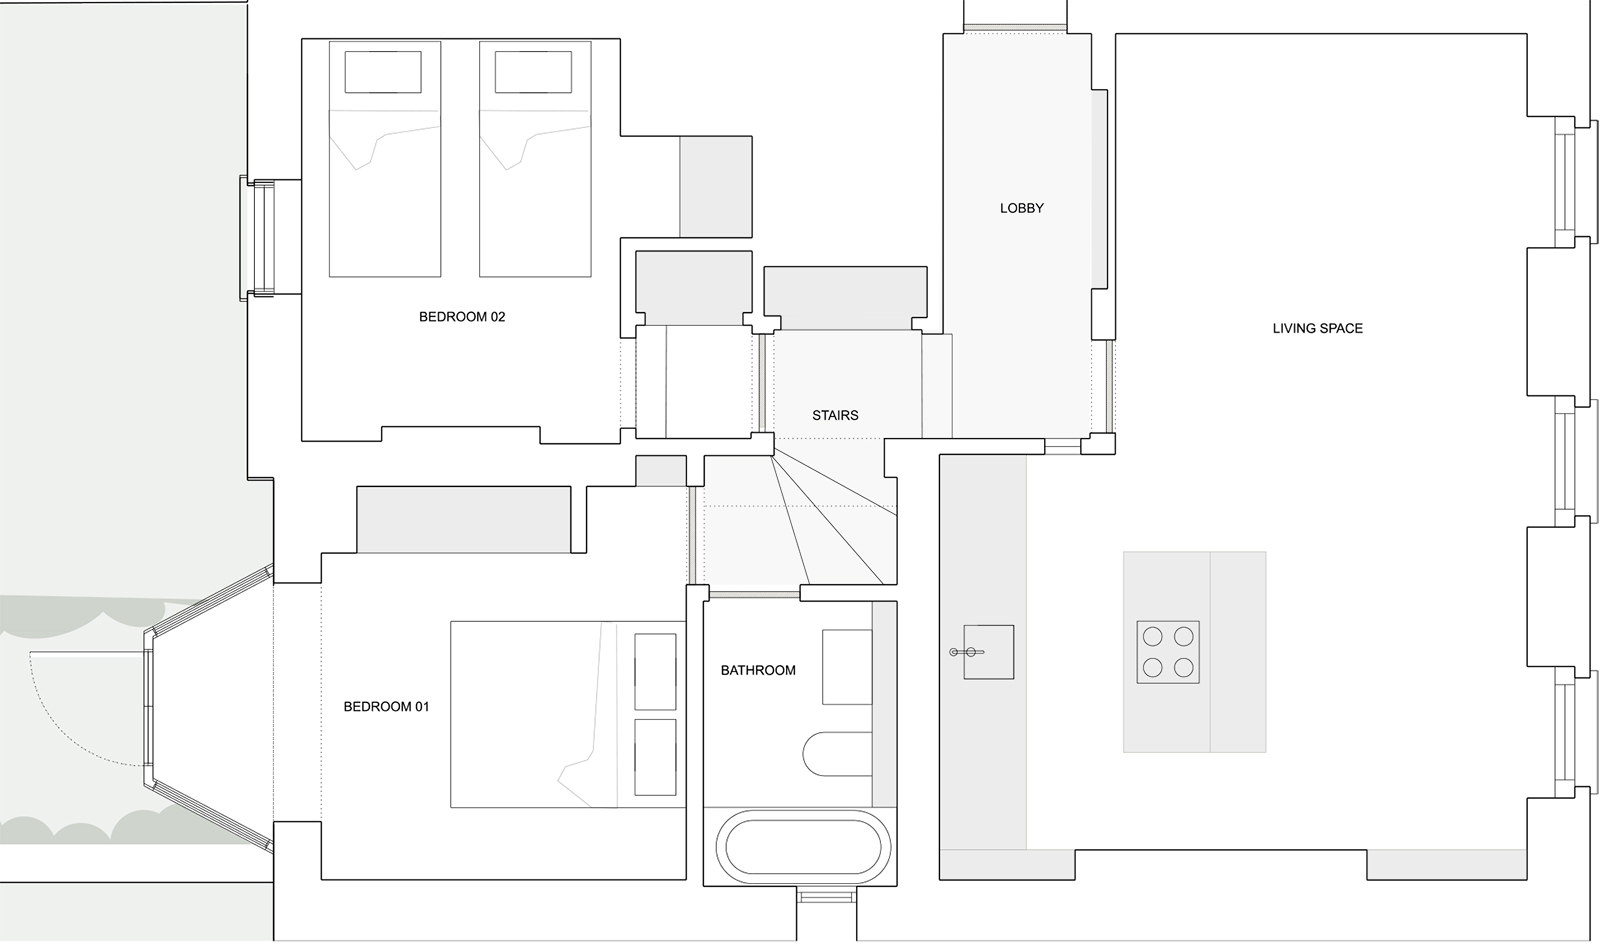 Highbury Fields Apartment: Existing ground floor plan